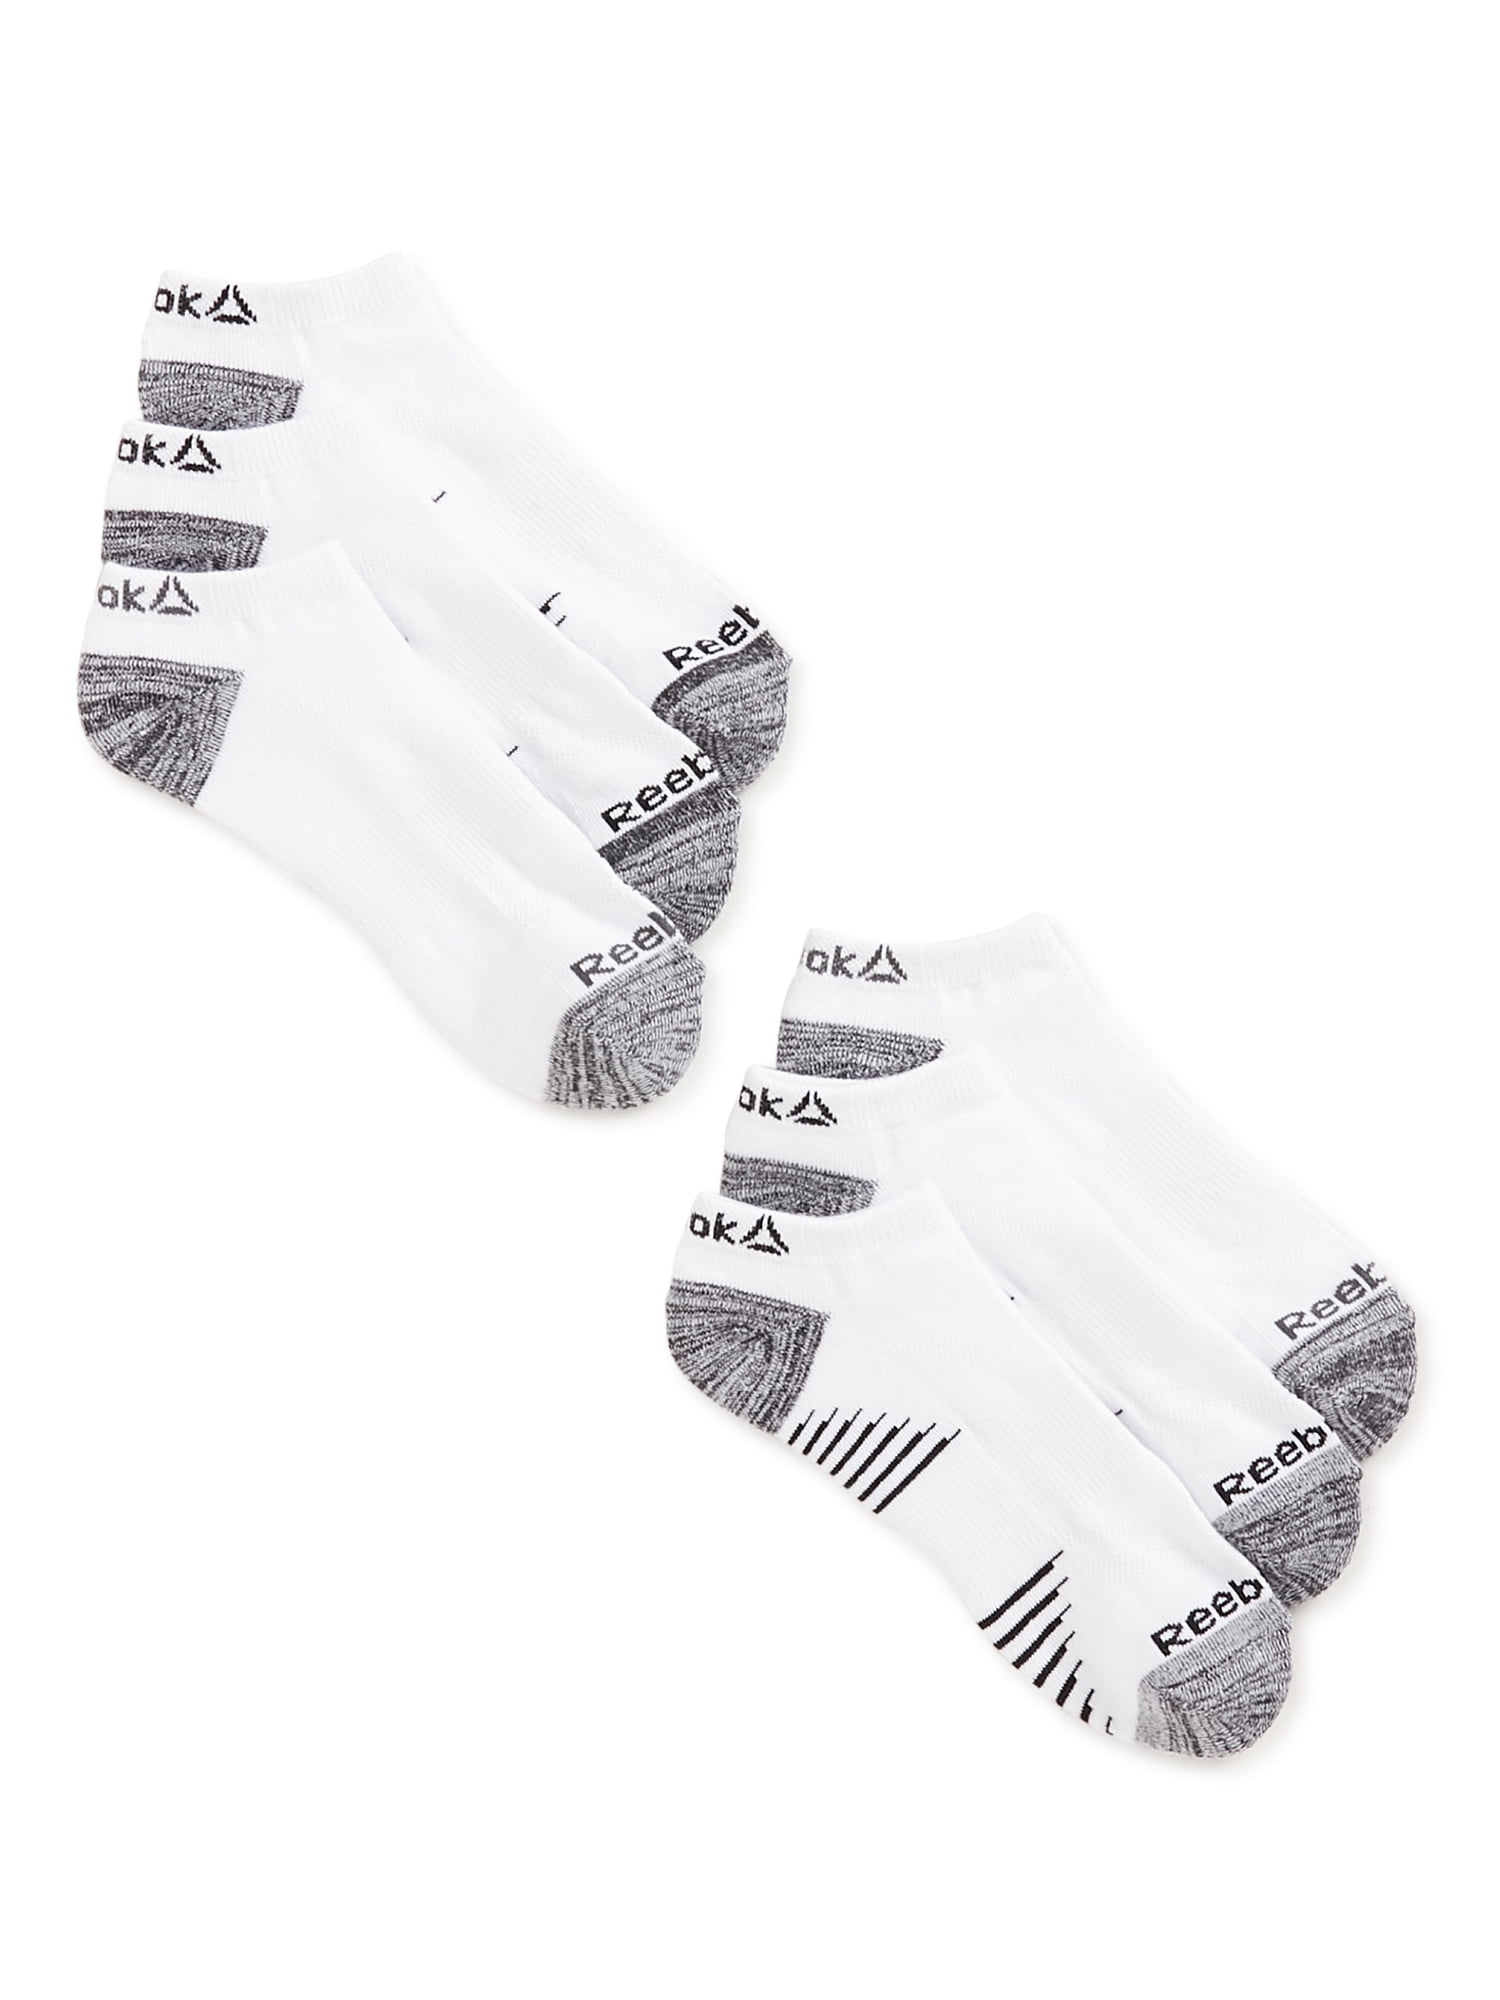 Reebok Men's Lowcut Sock, 6 Pack - Walmart.com